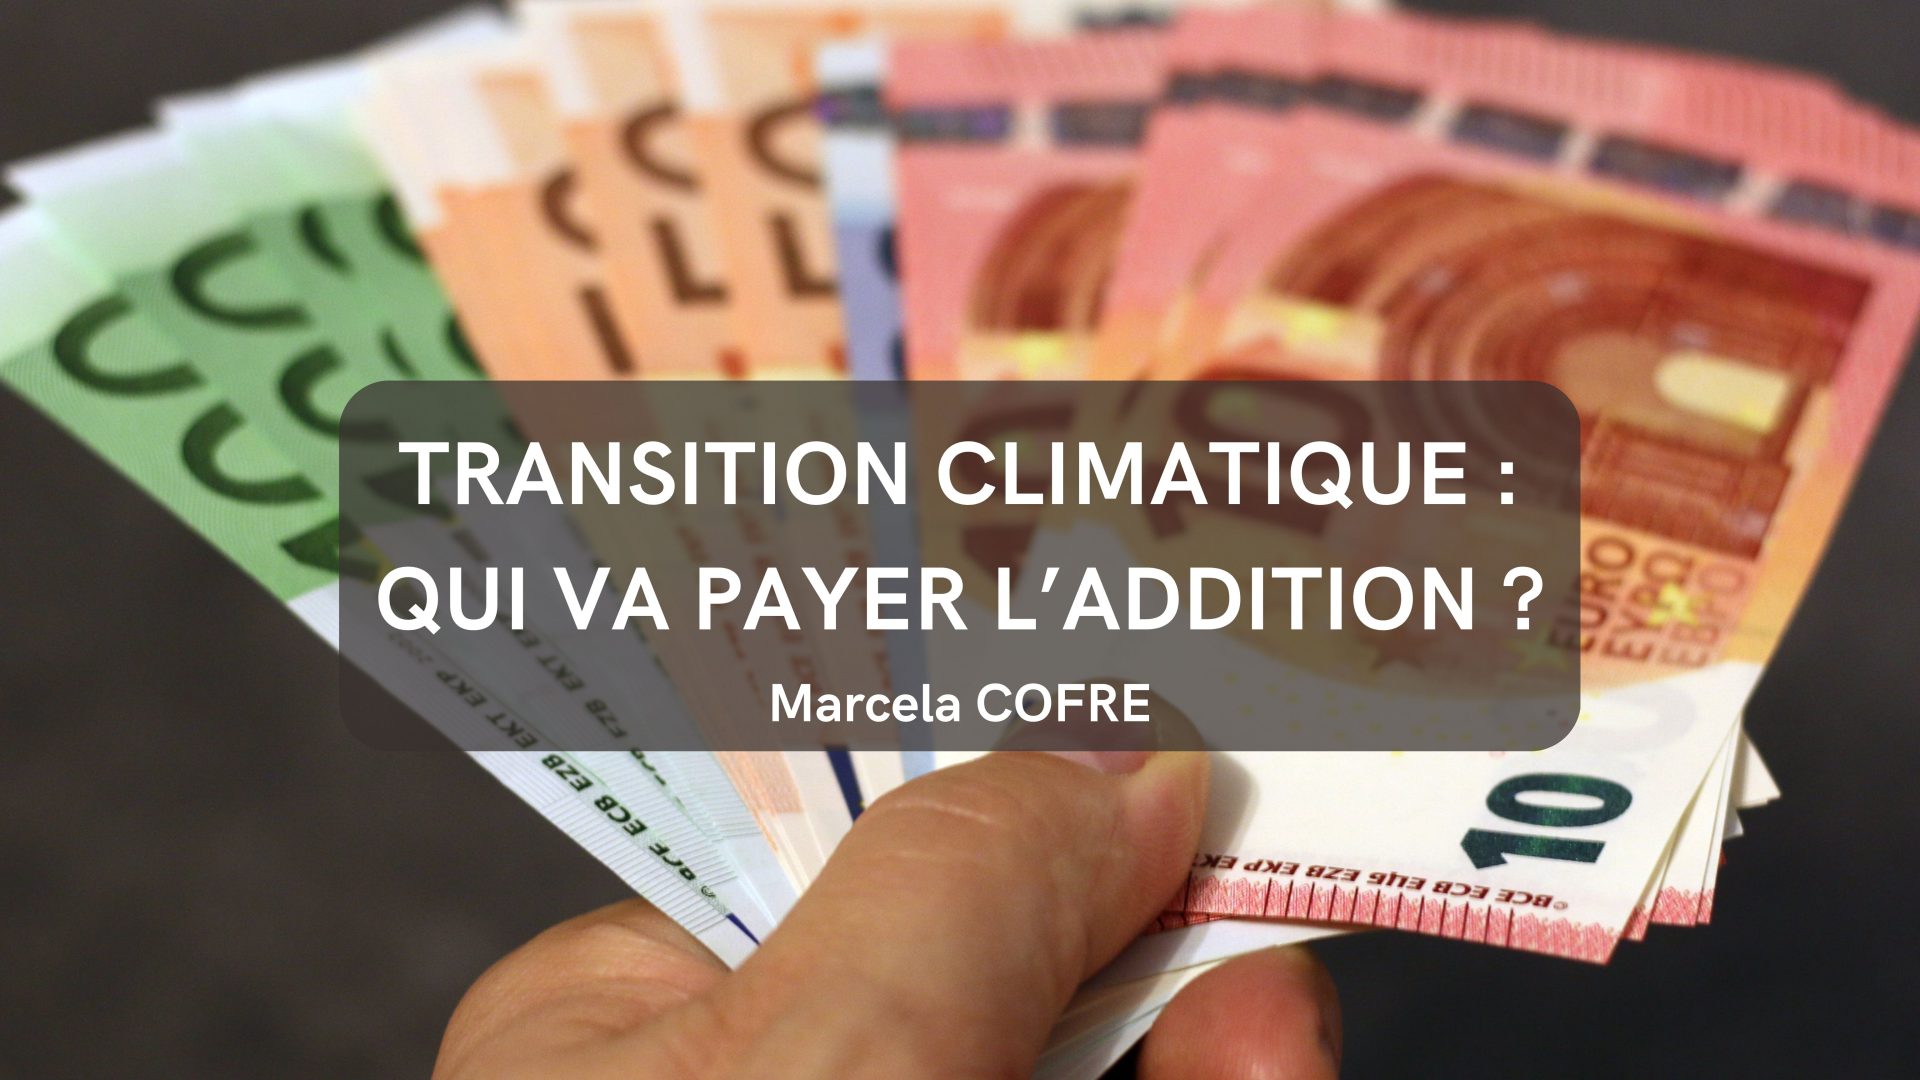 Transition climatique : qui va payer l’addition ?